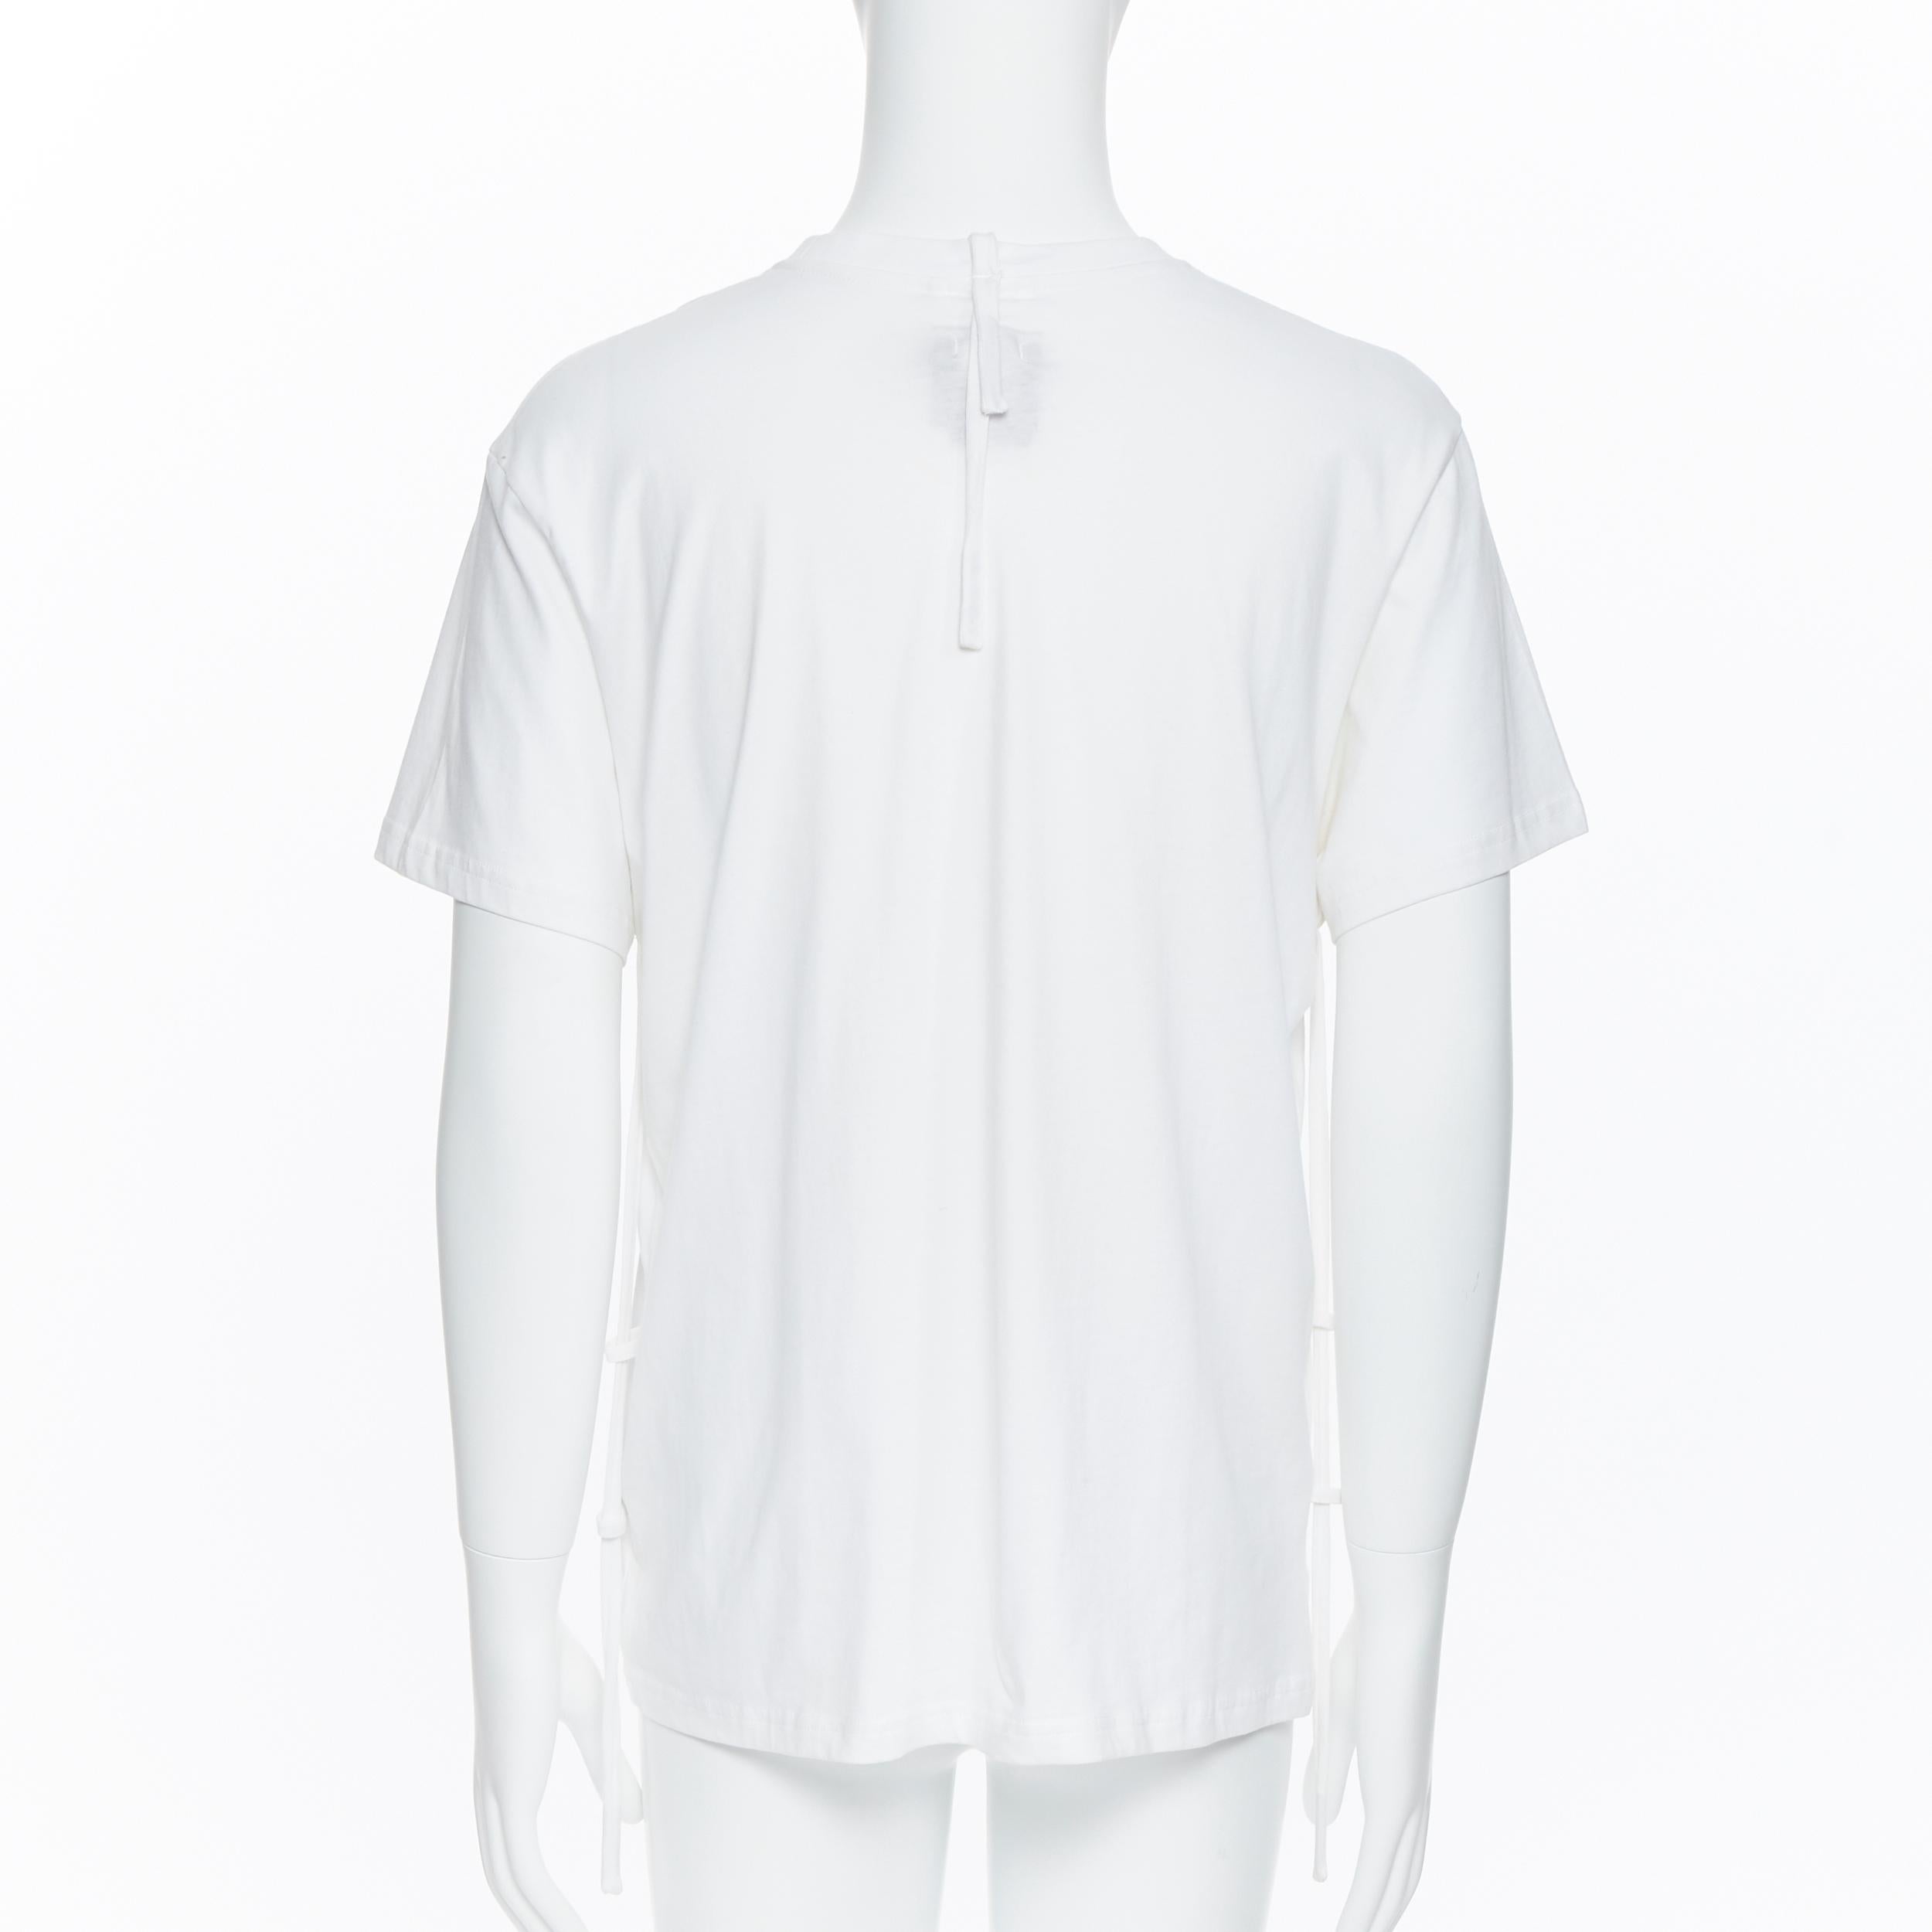 CRAIG GREEN white cotton weighed drawstring strap short sleeve t-shirt top M 1